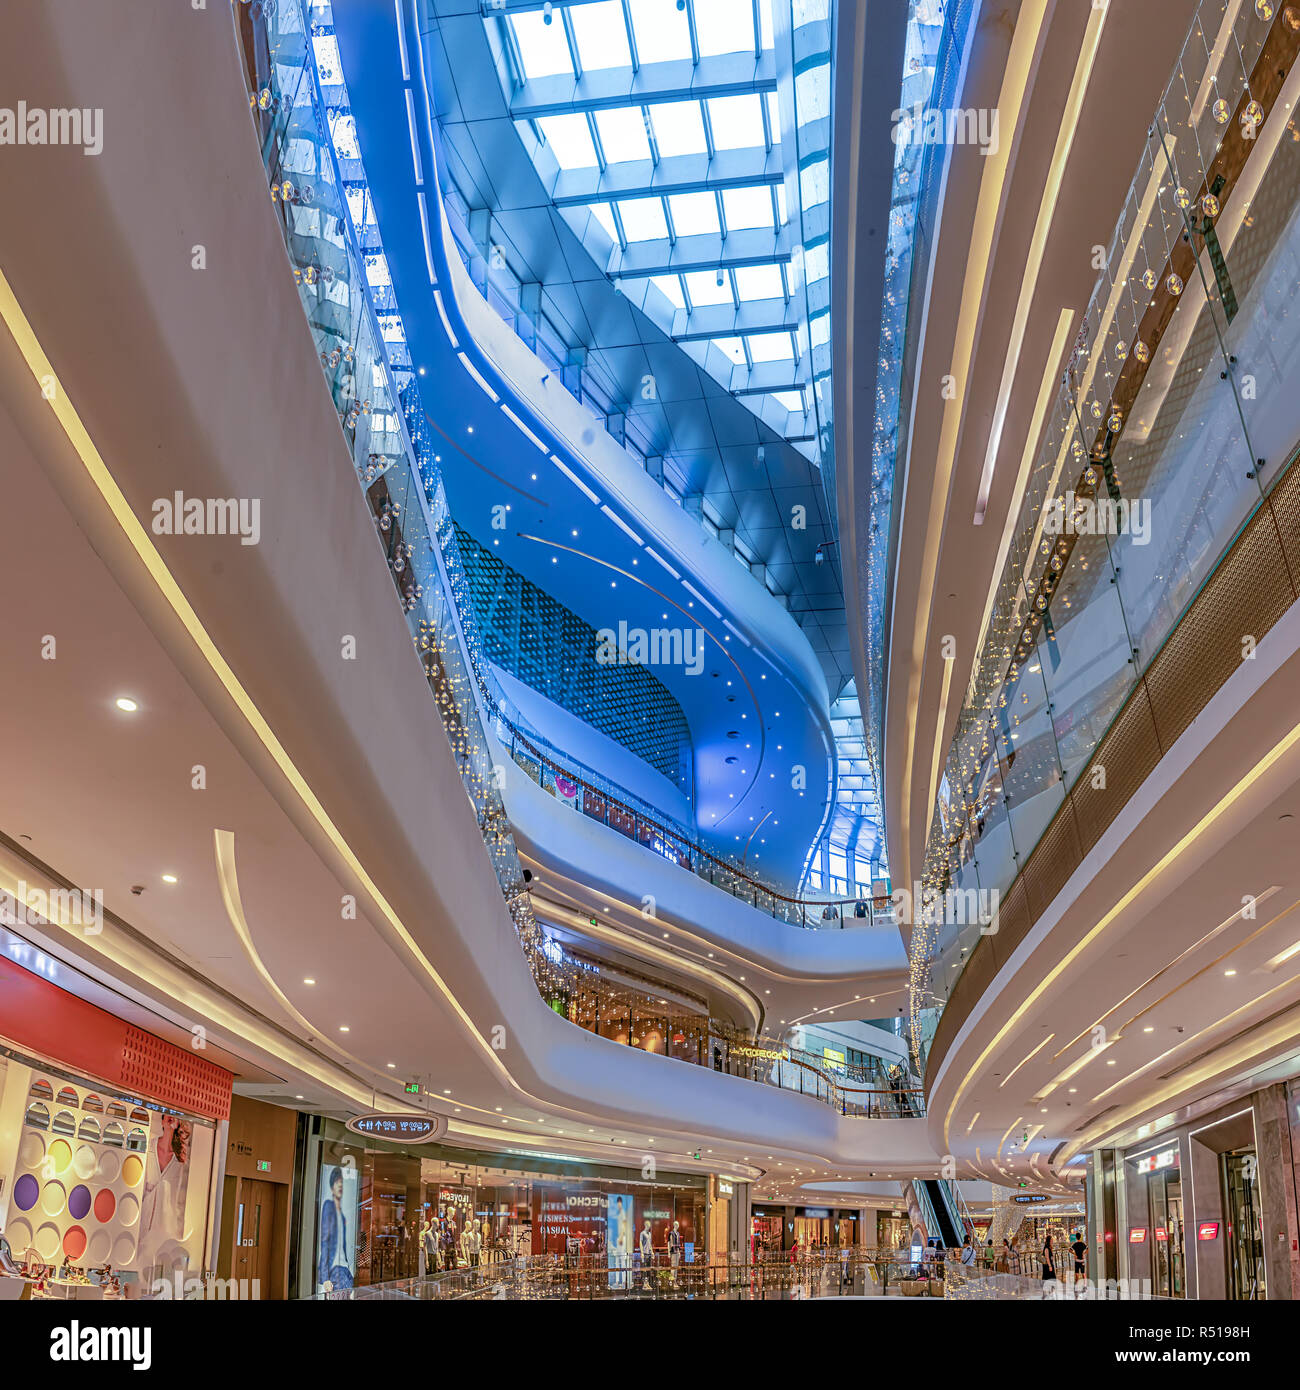 Mall interior Stock Photo